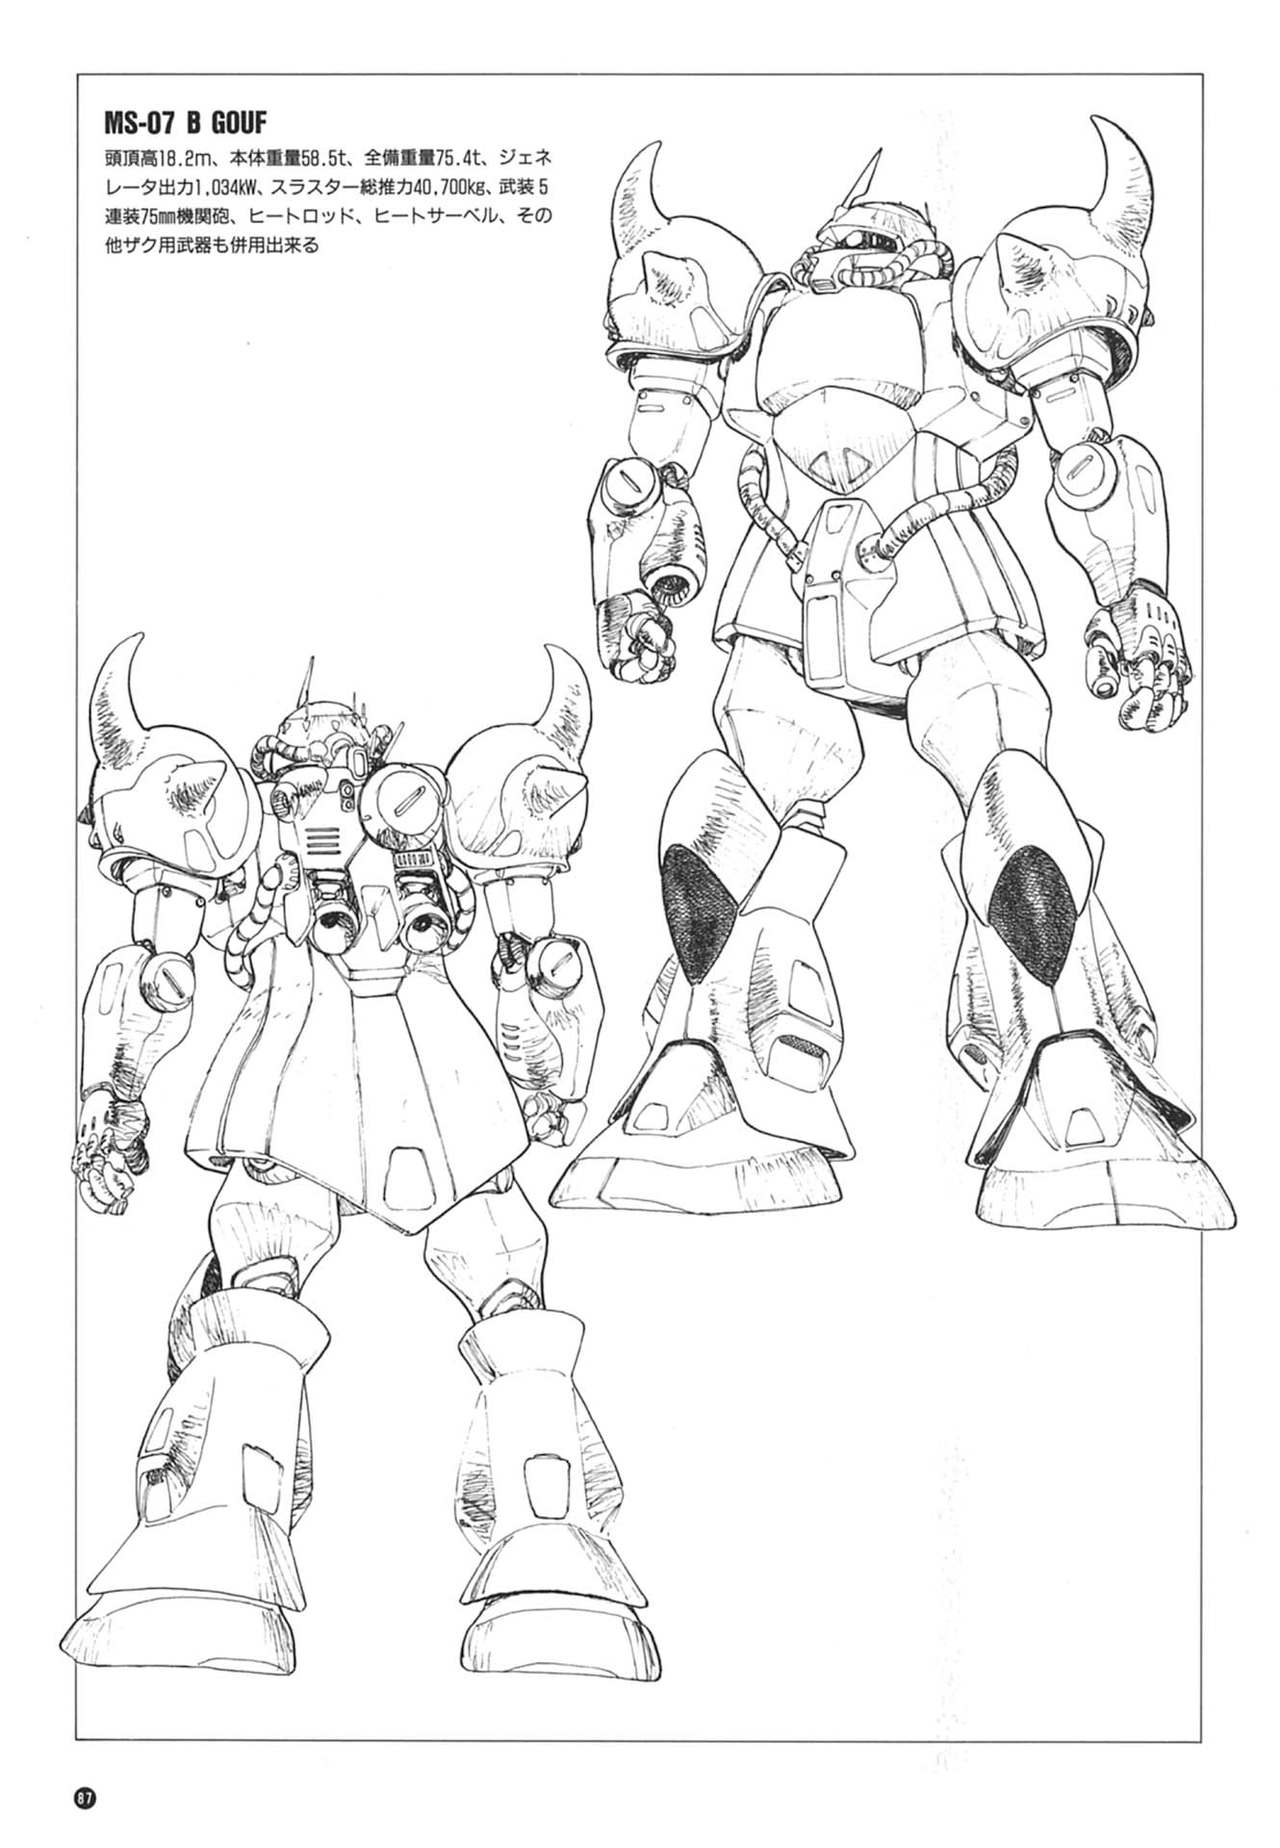 [Kazuhisa Kondo] Kazuhisa Kondo 2D & 3D Works - Go Ahead - From Mobile Suit Gundam to Original Mechanism 86